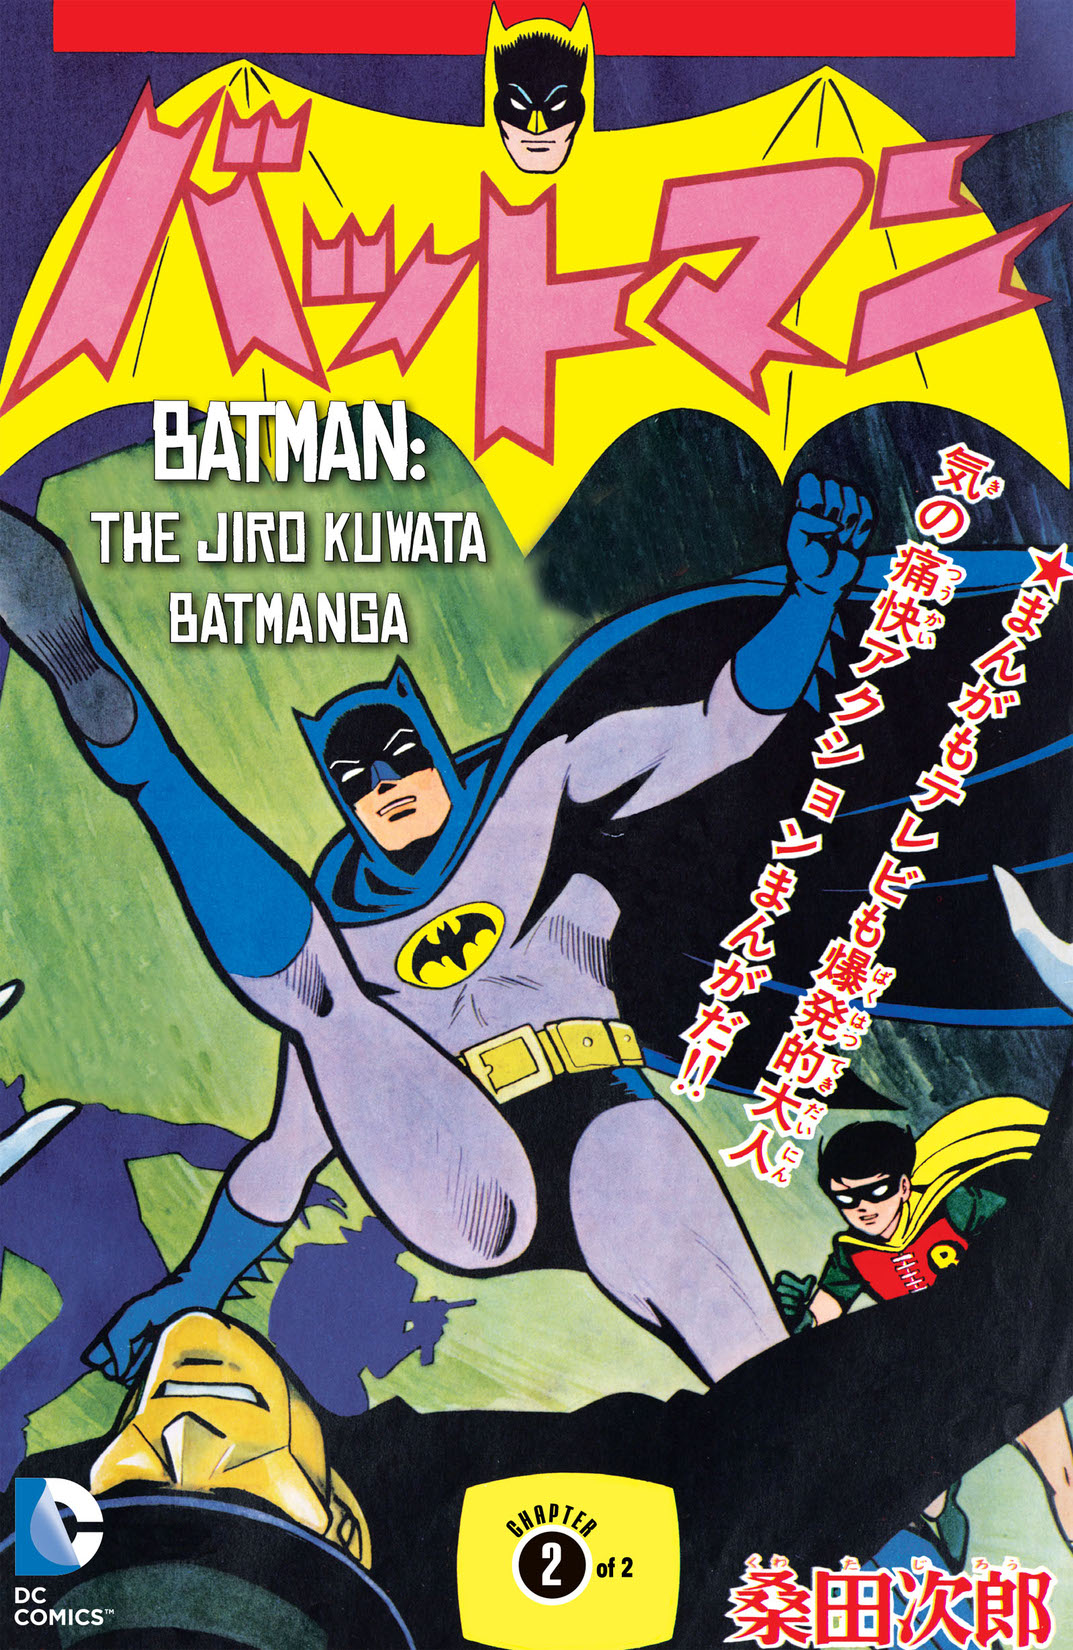 Batman: The Jiro Kuwata Batmanga #48 preview images